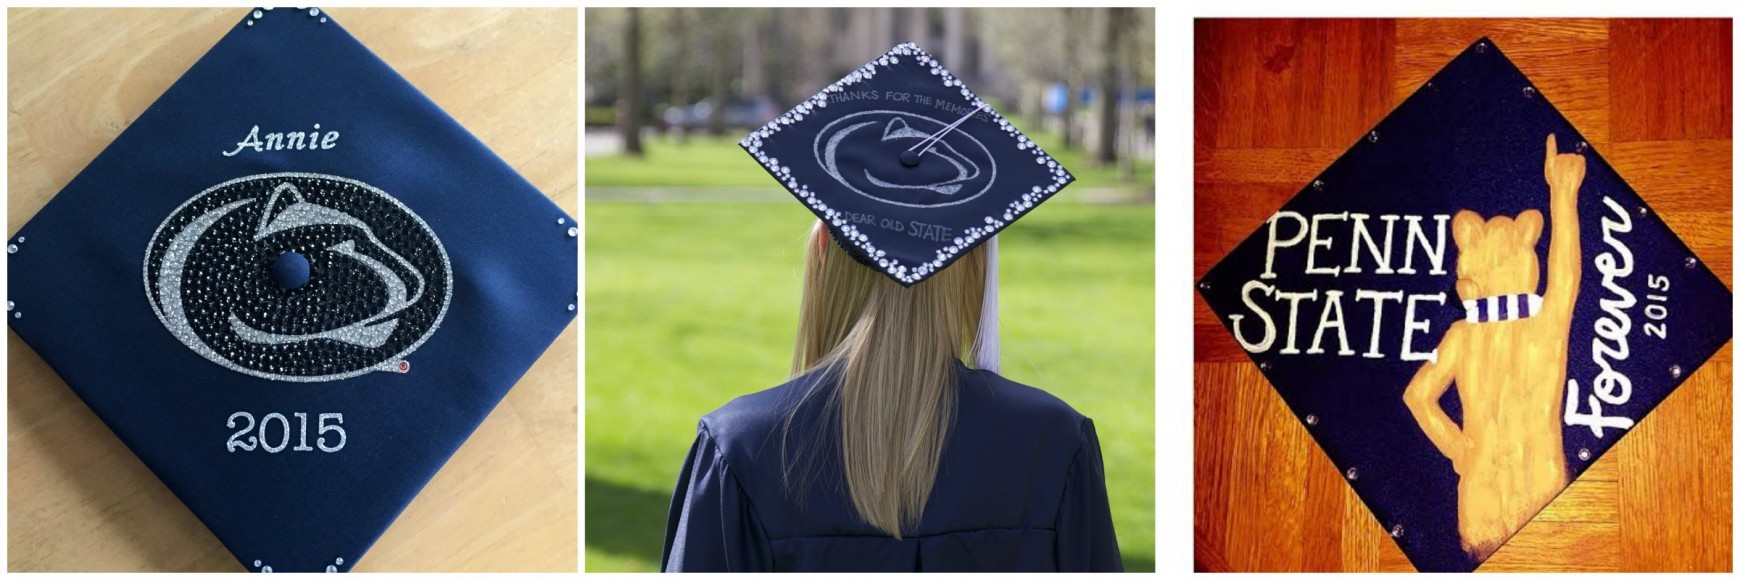 penn-state-s-most-creative-graduation-caps